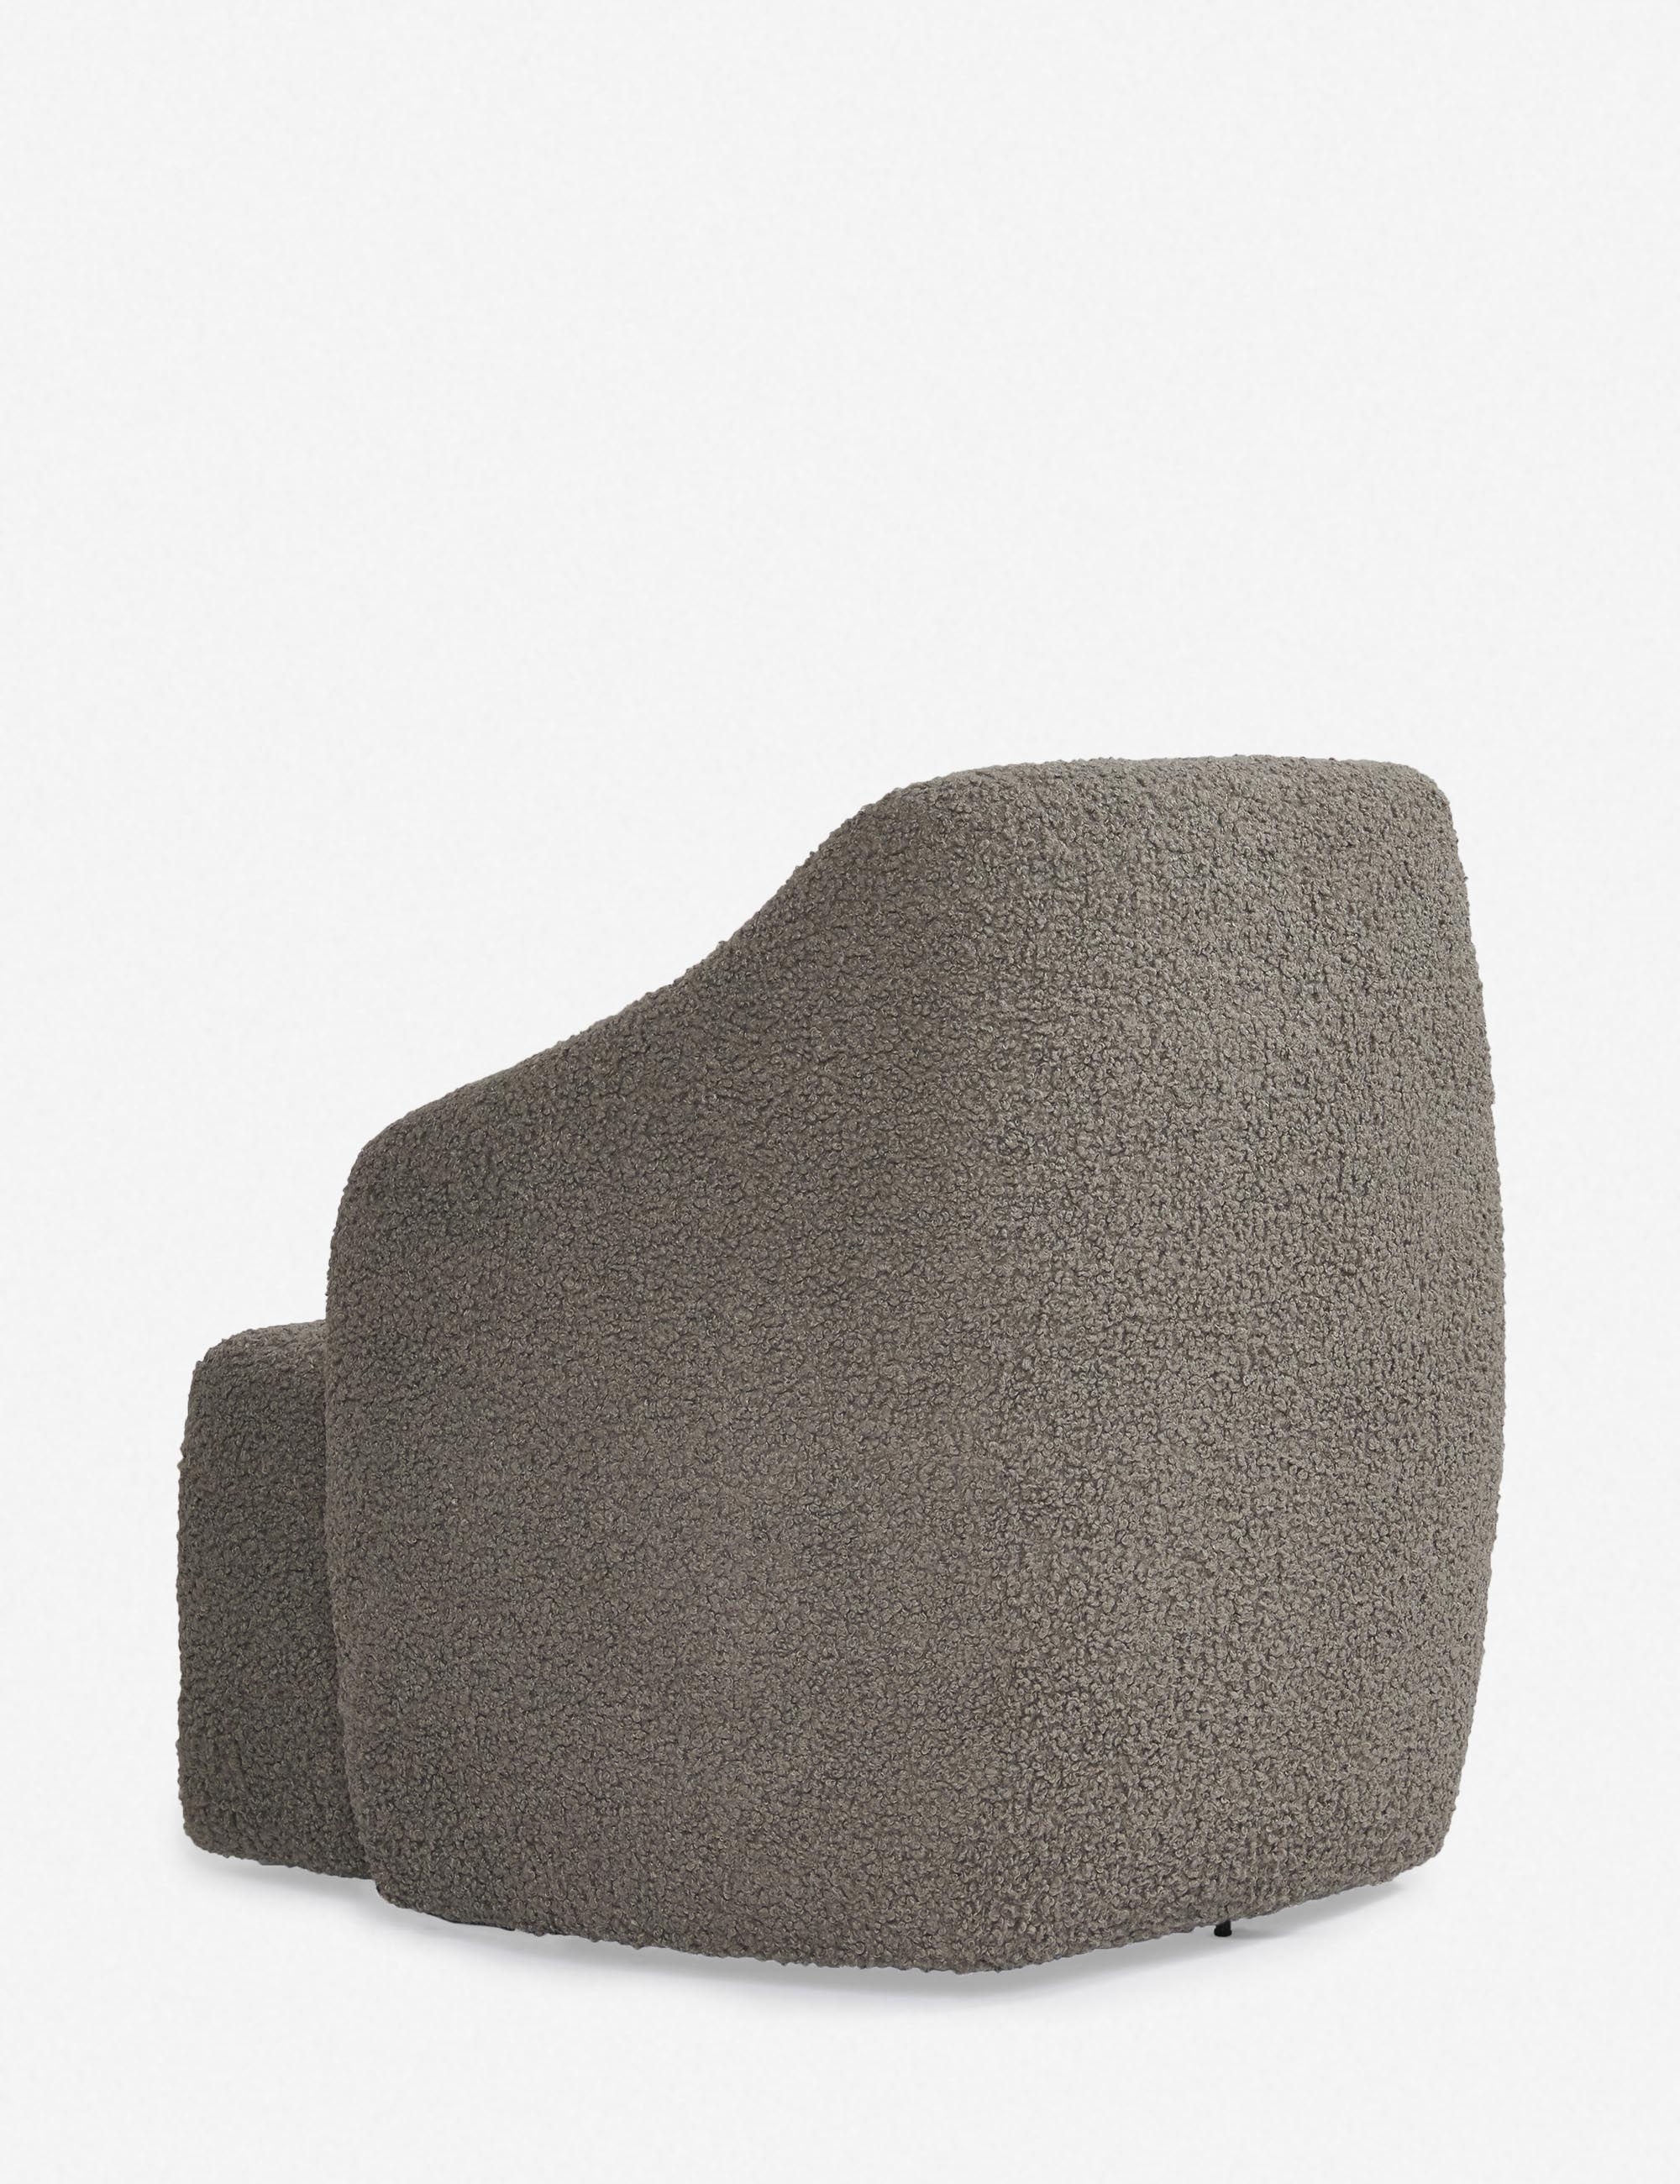 Tobi Swivel Chair, Gray - Image 4